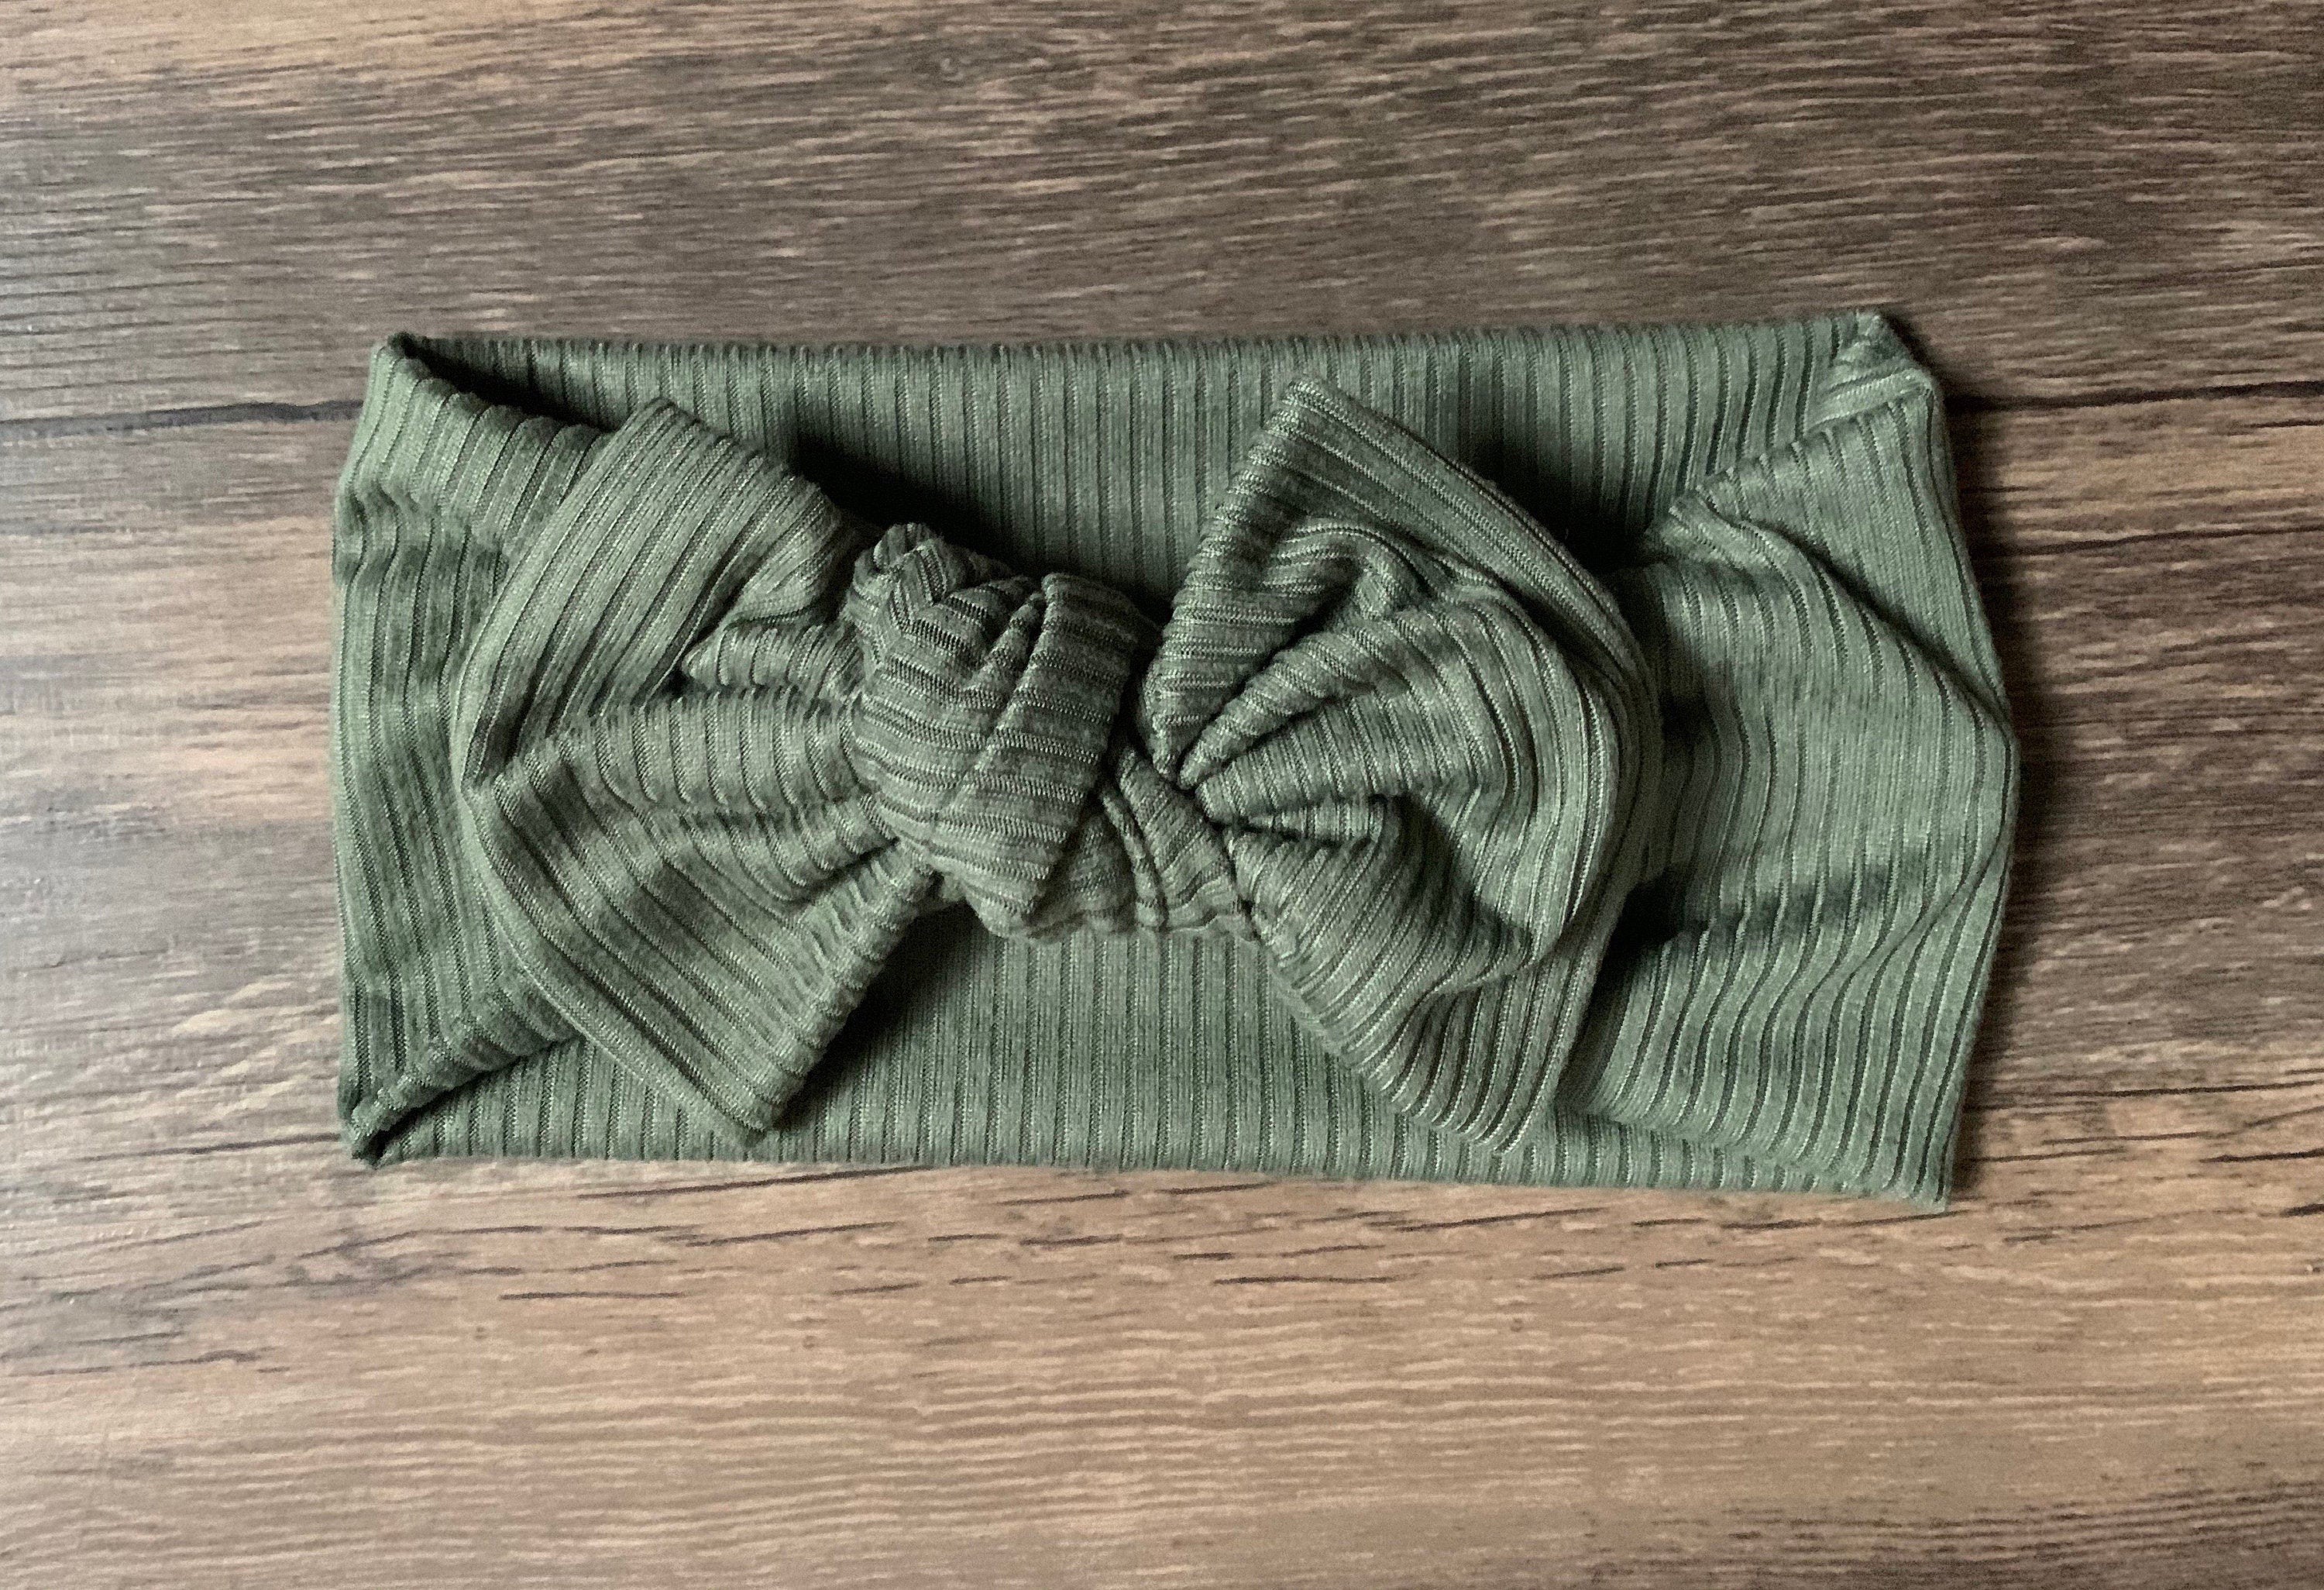 Ribbed olive turban headband,  olive green knotted headband, olive baby turban headband, wide headband, solid yoga headband, top knot